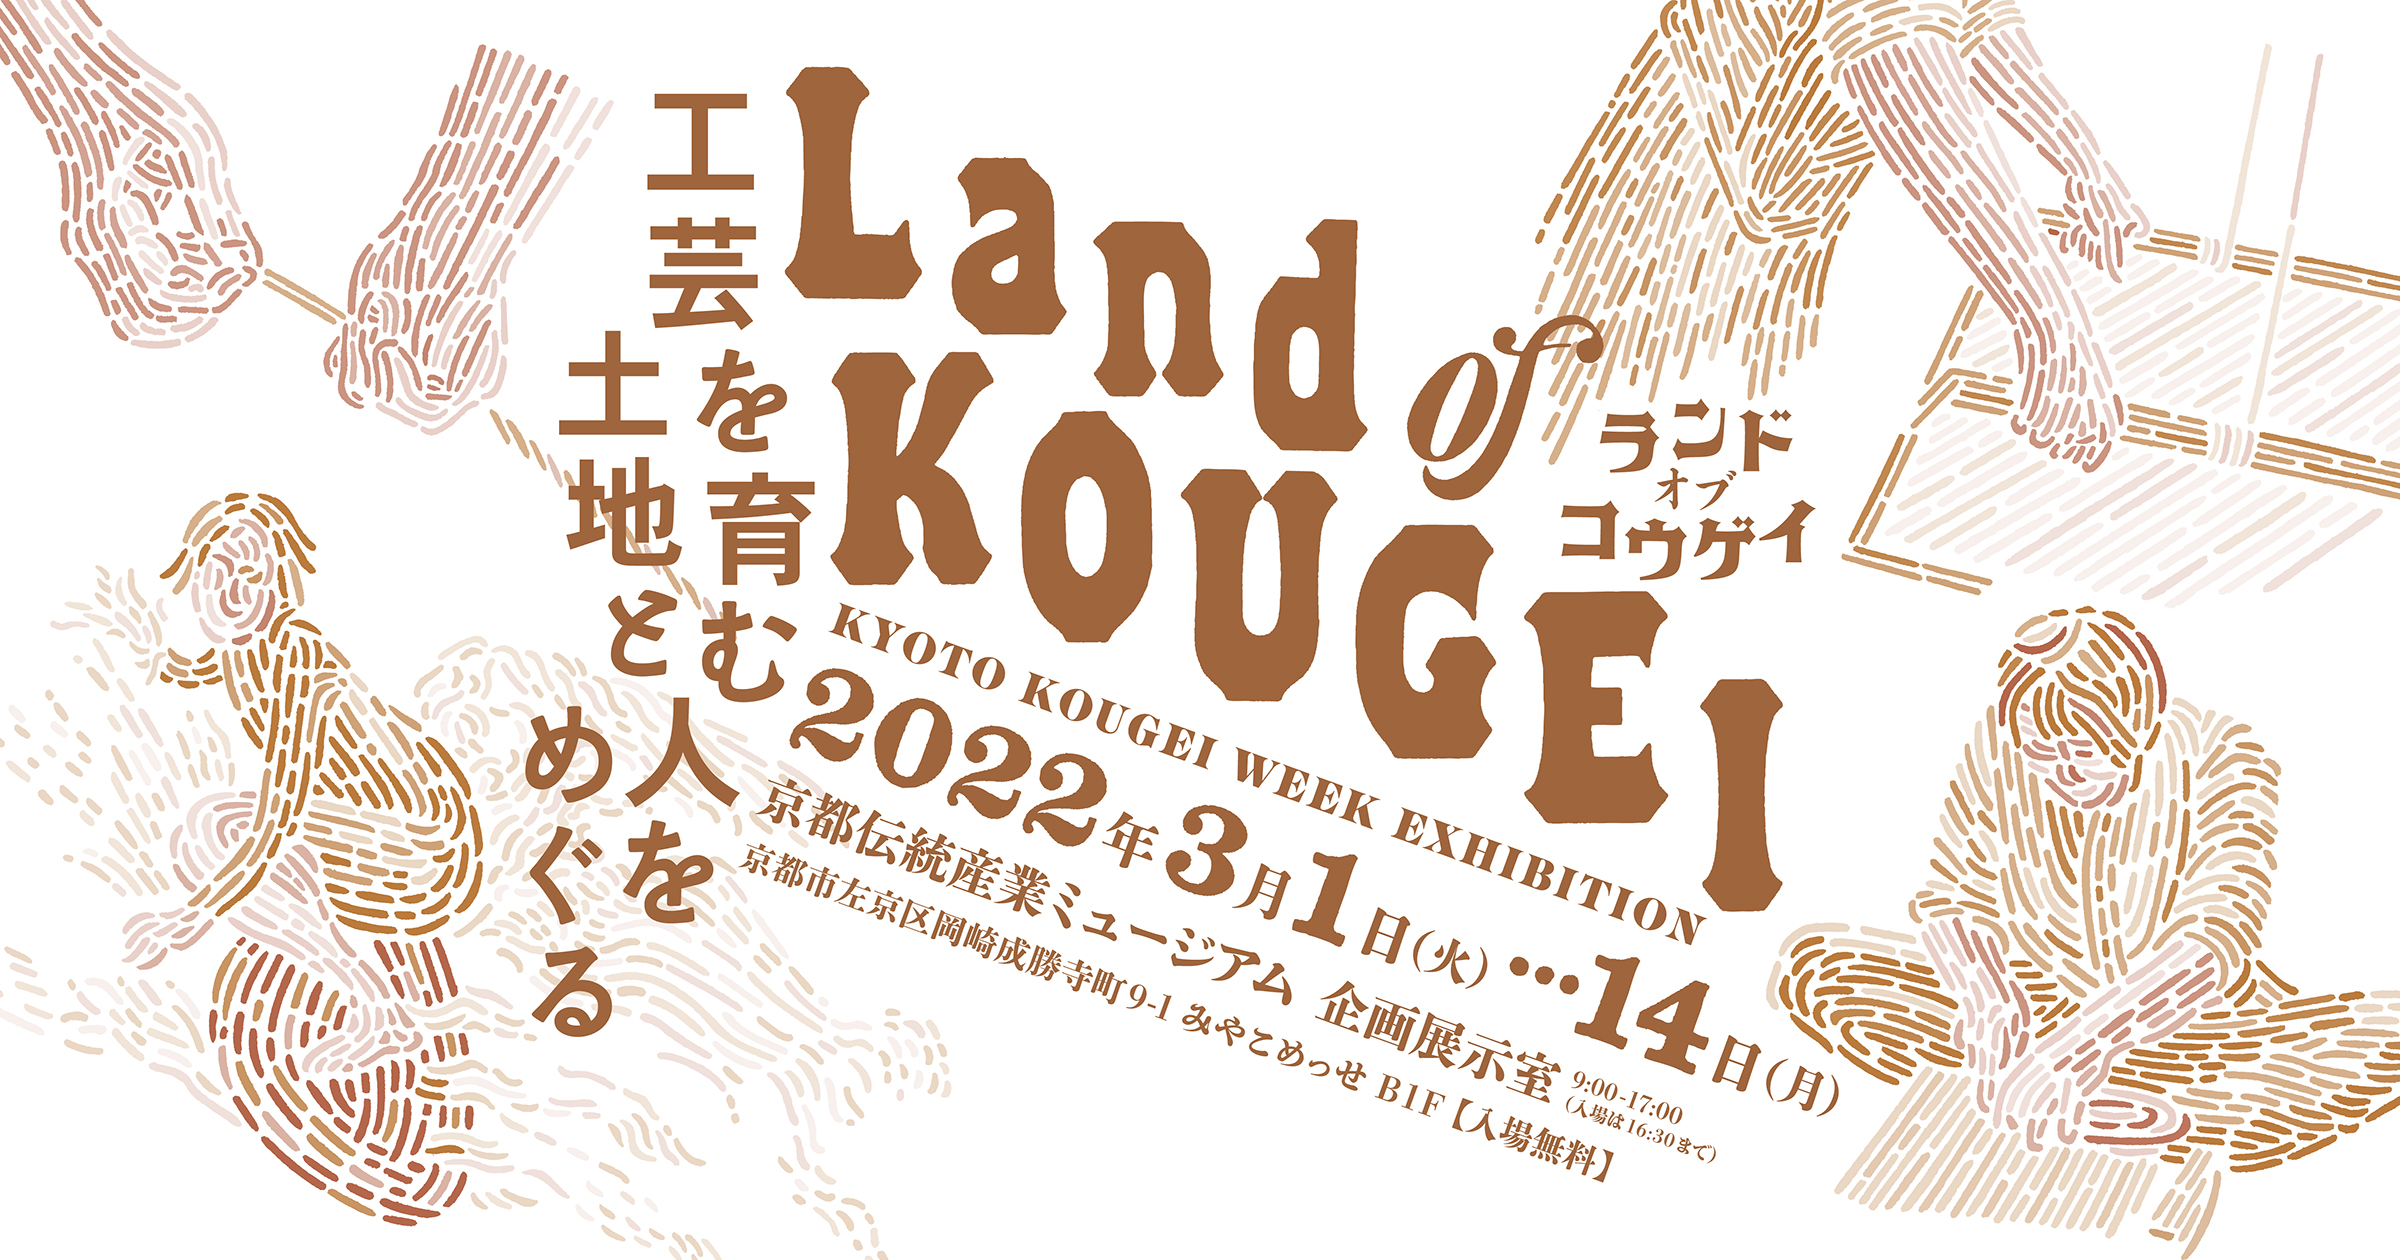 KYOTO KOUGEI WEEK EXHIBITION<br>「 Land of KOUGEI 」-image